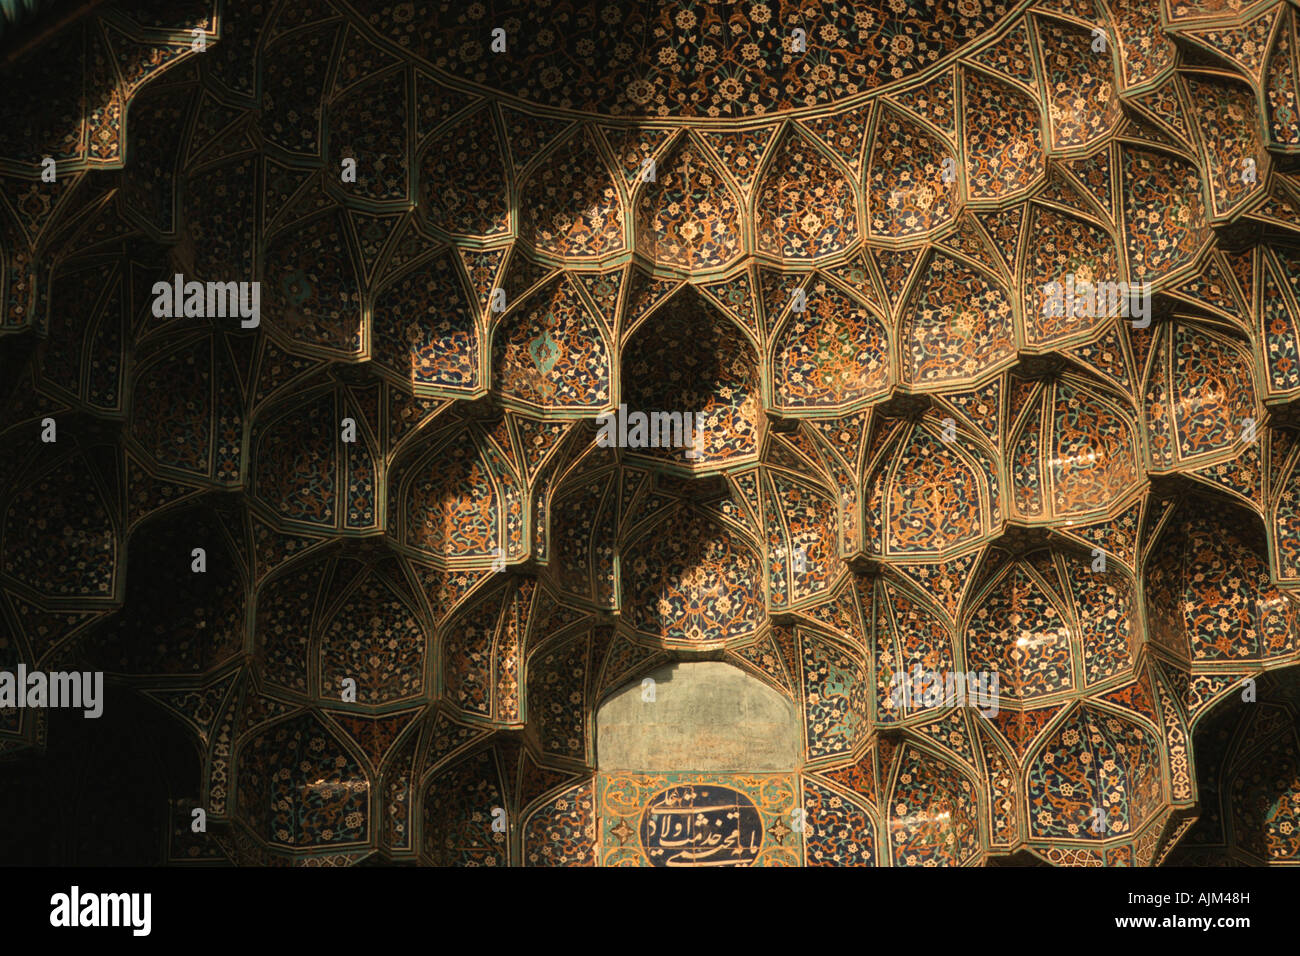 Stalactites in the Masdjed e imam-mosque, Iran, Isfahan Stock Photo